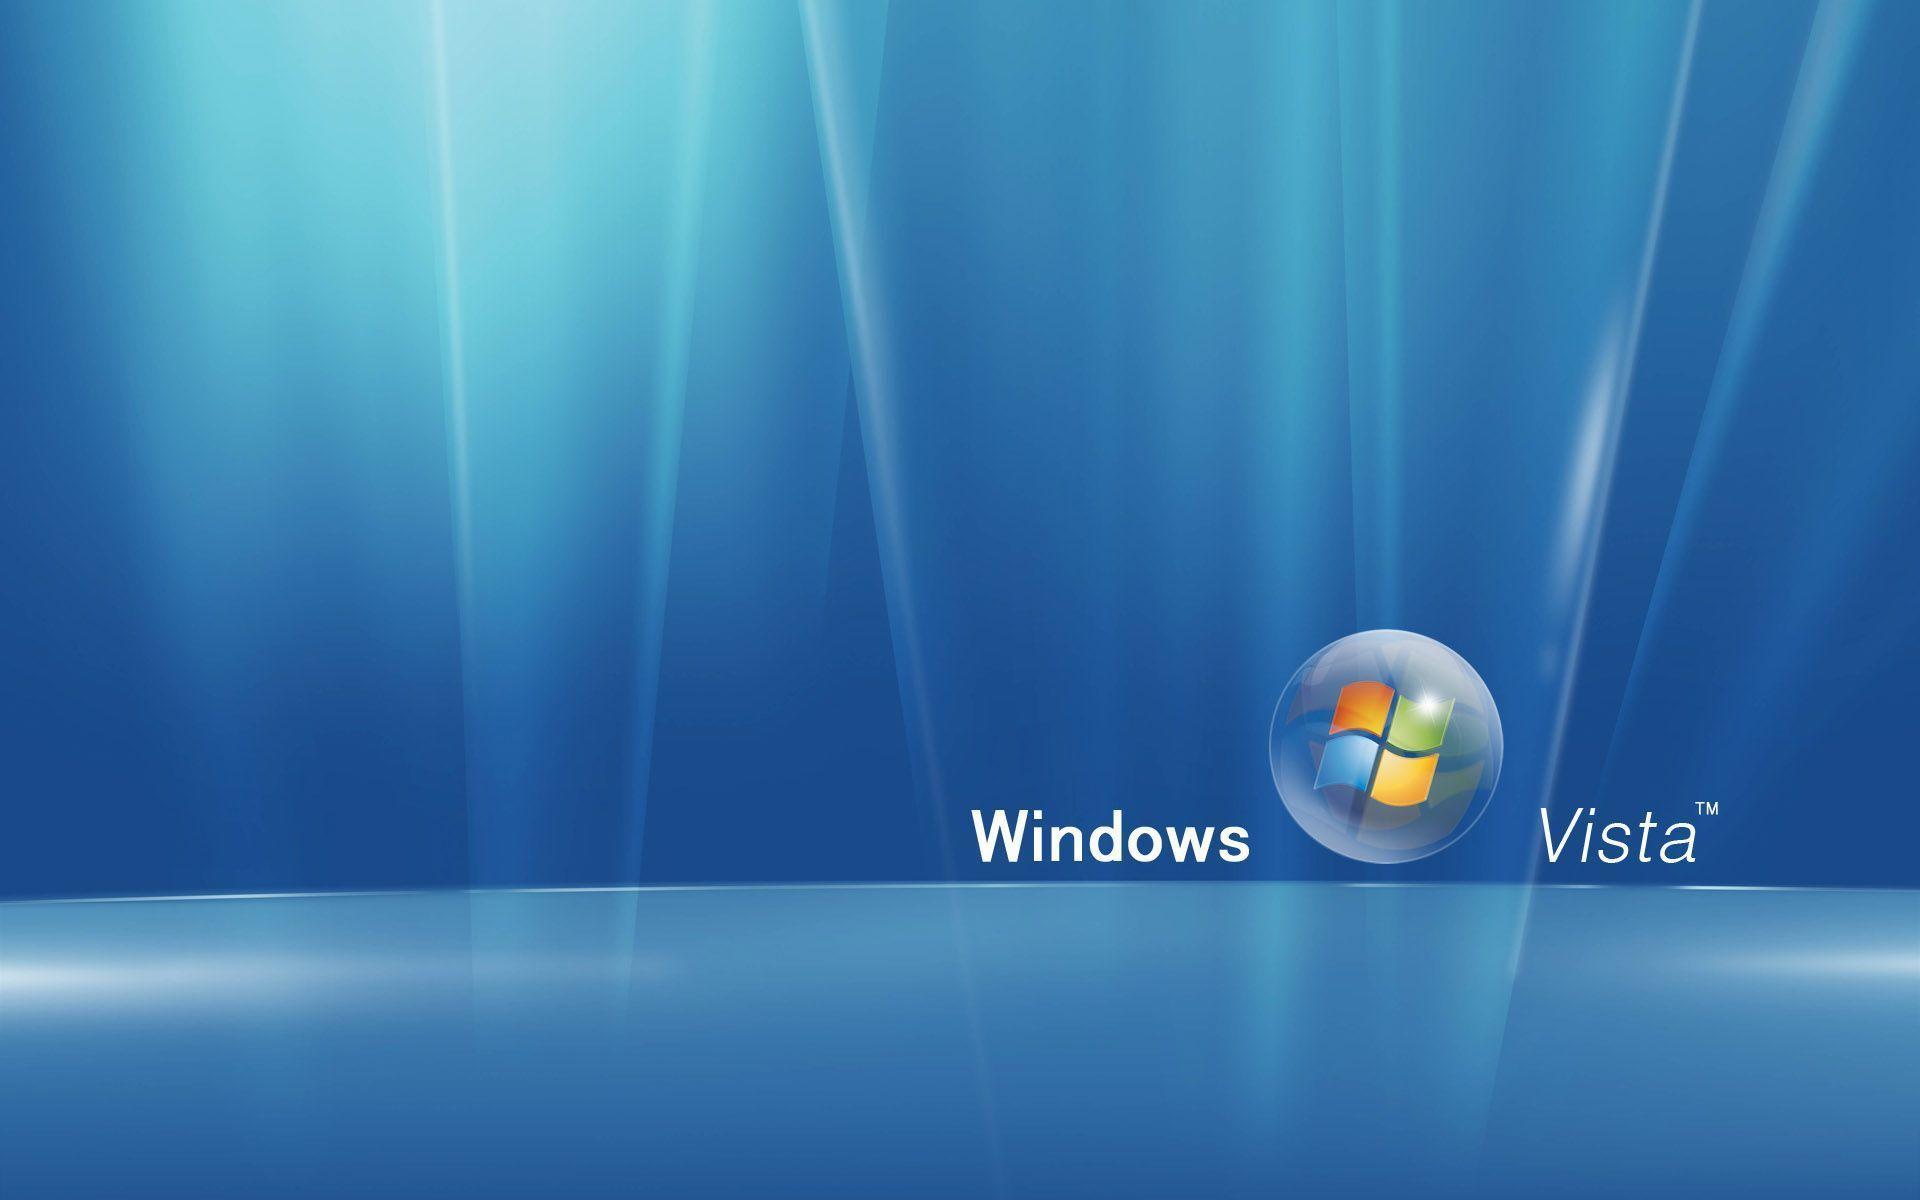 Free Download Windows Vista Wallpaper in 1920x1200 resolutions